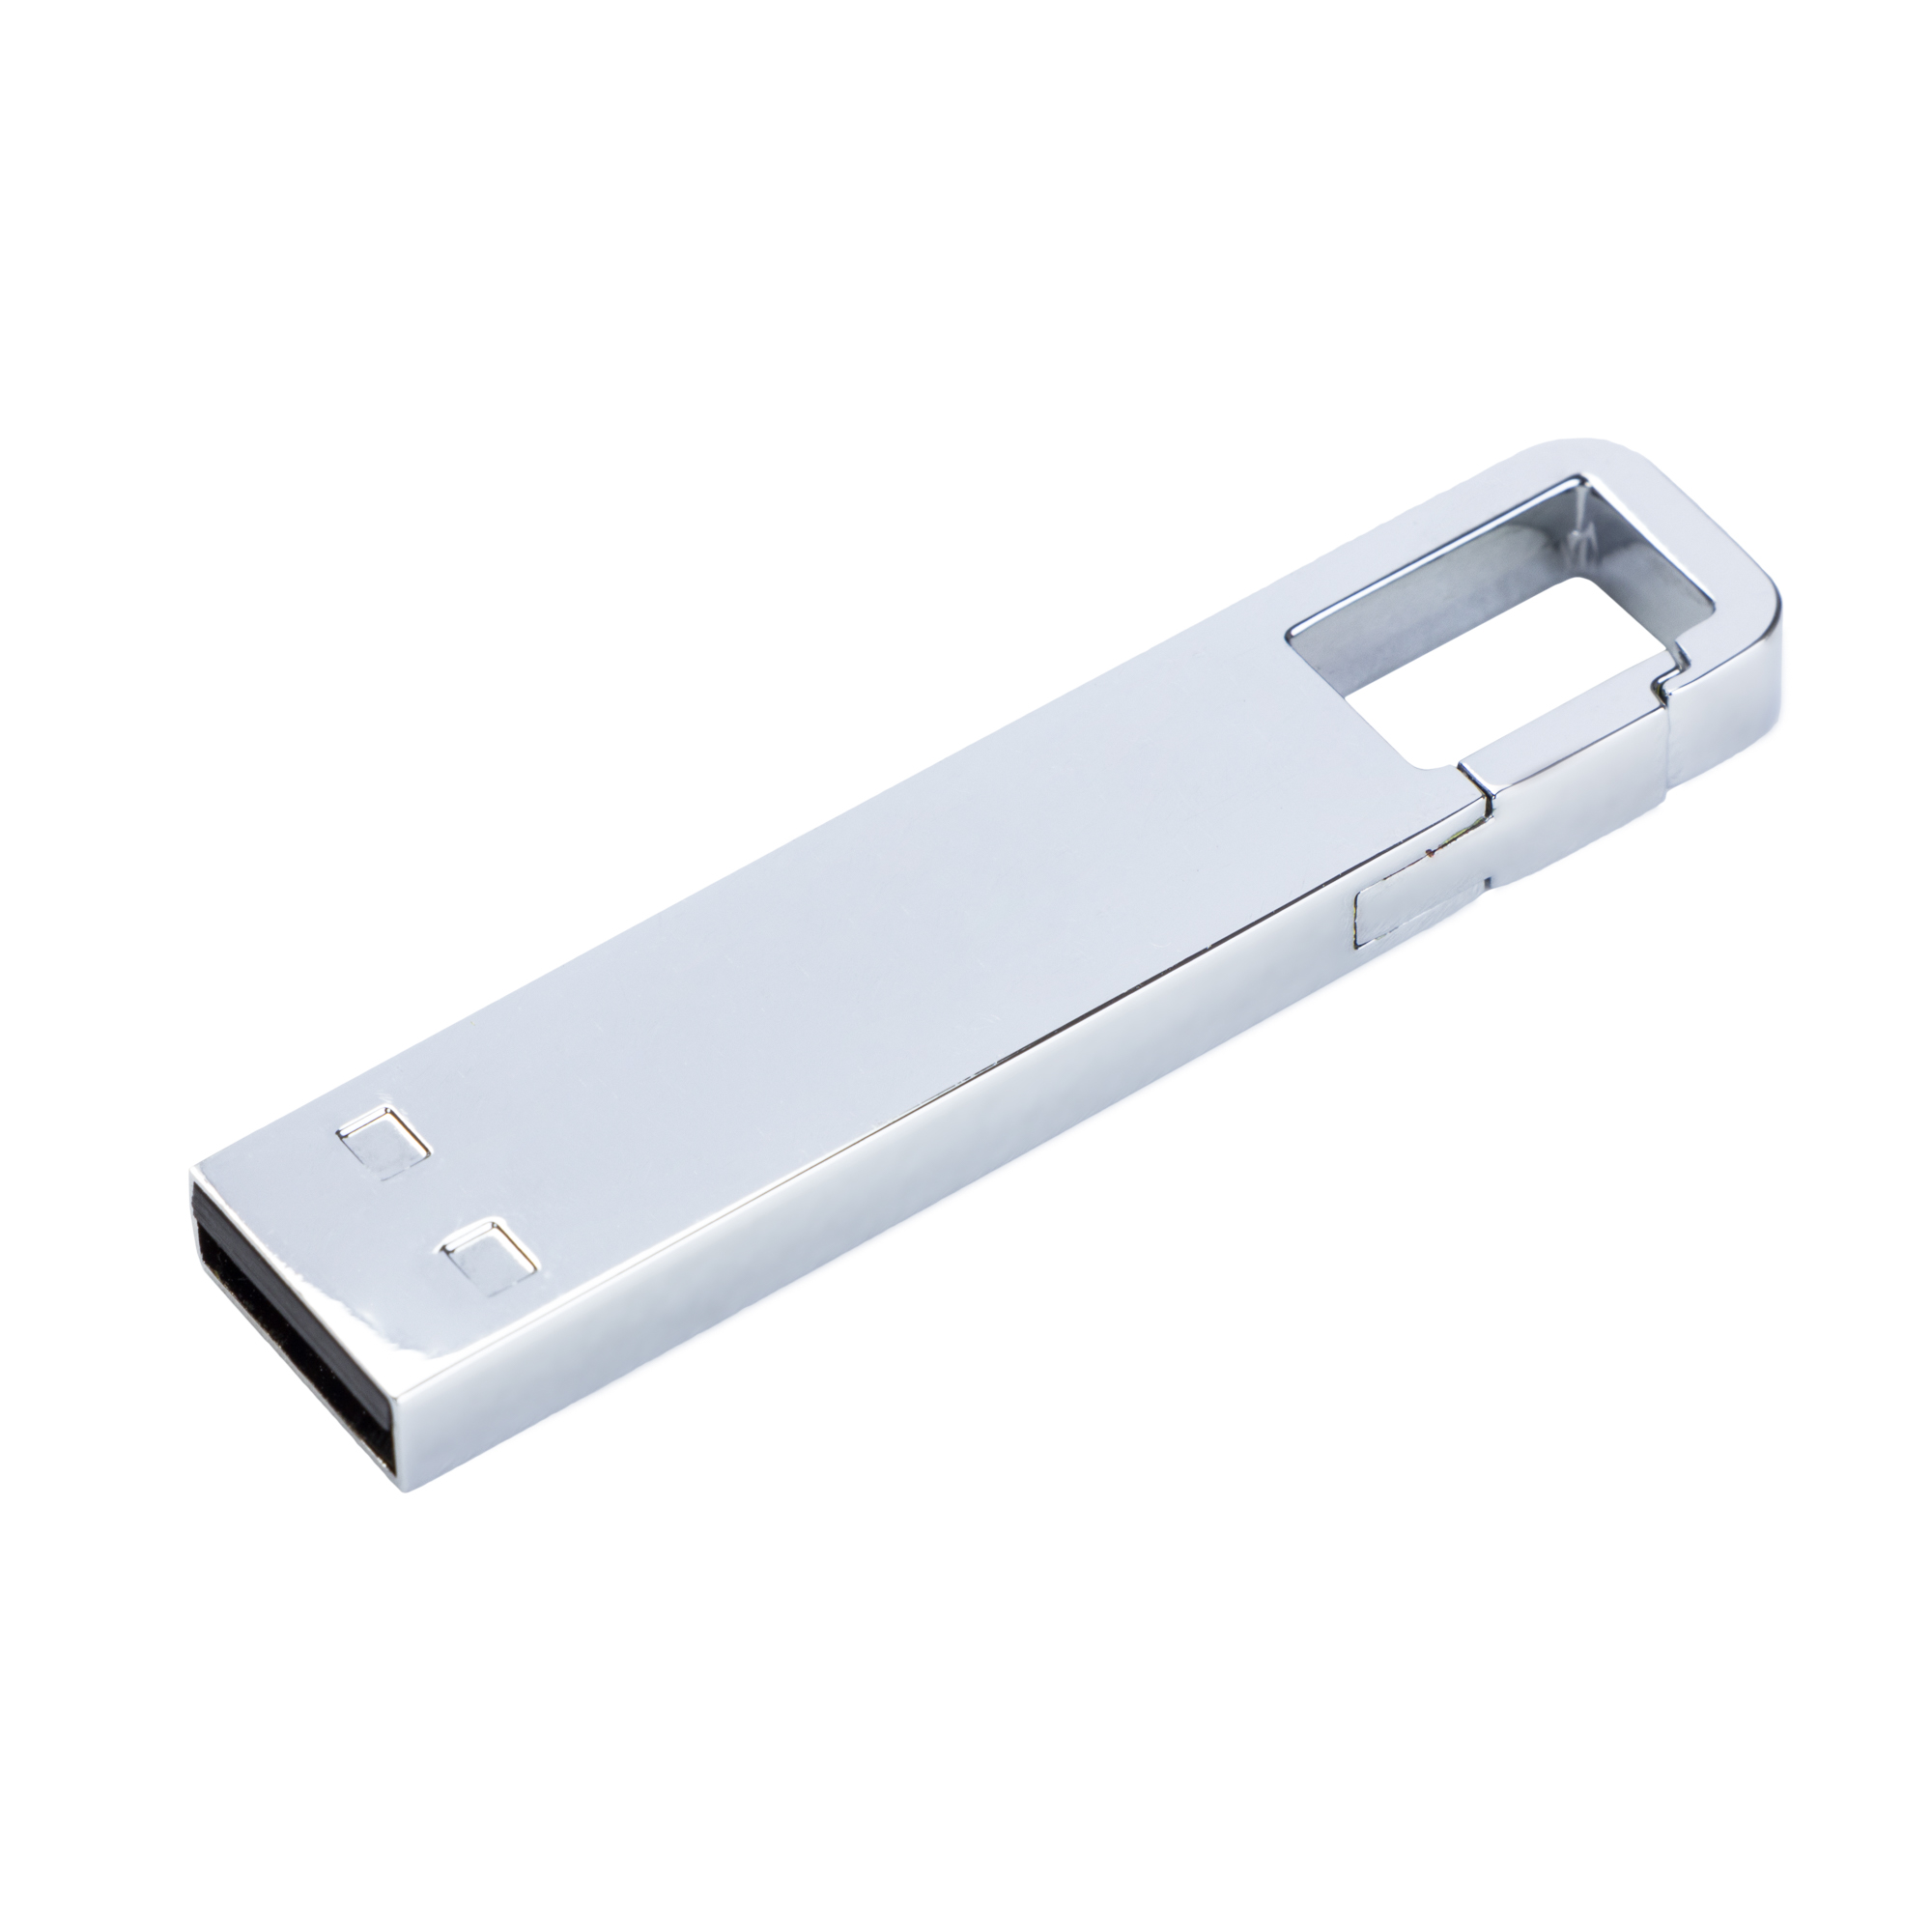 USB флешка модель 282 S Gloss, объем памяти 512 MB, цвет S